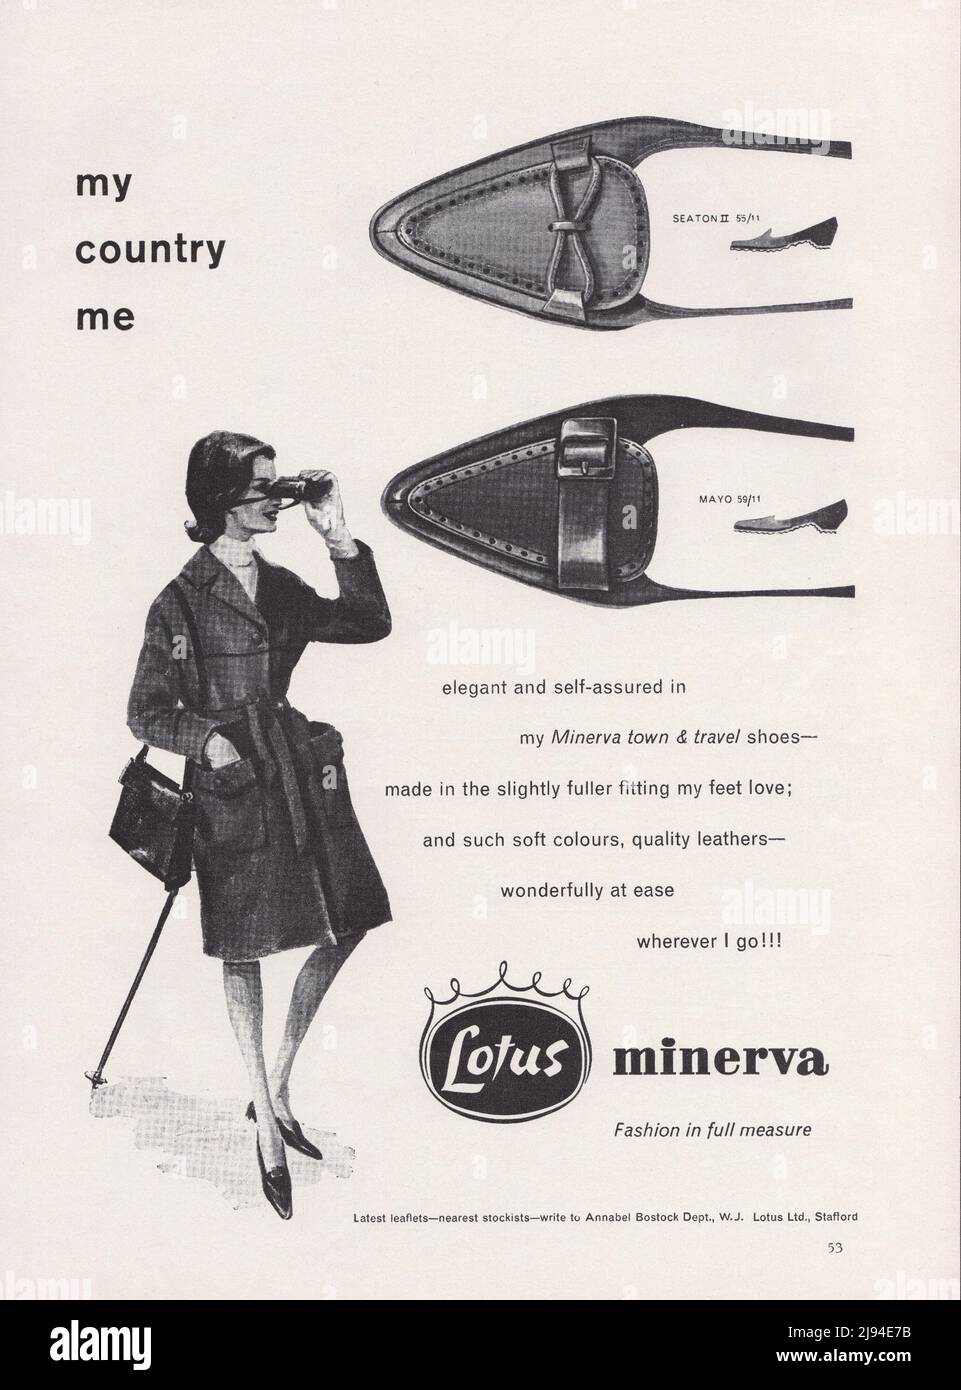 Lotus Minerva fashion shoes vintage paper advertisement advert 1980s 1970s Stock Photo